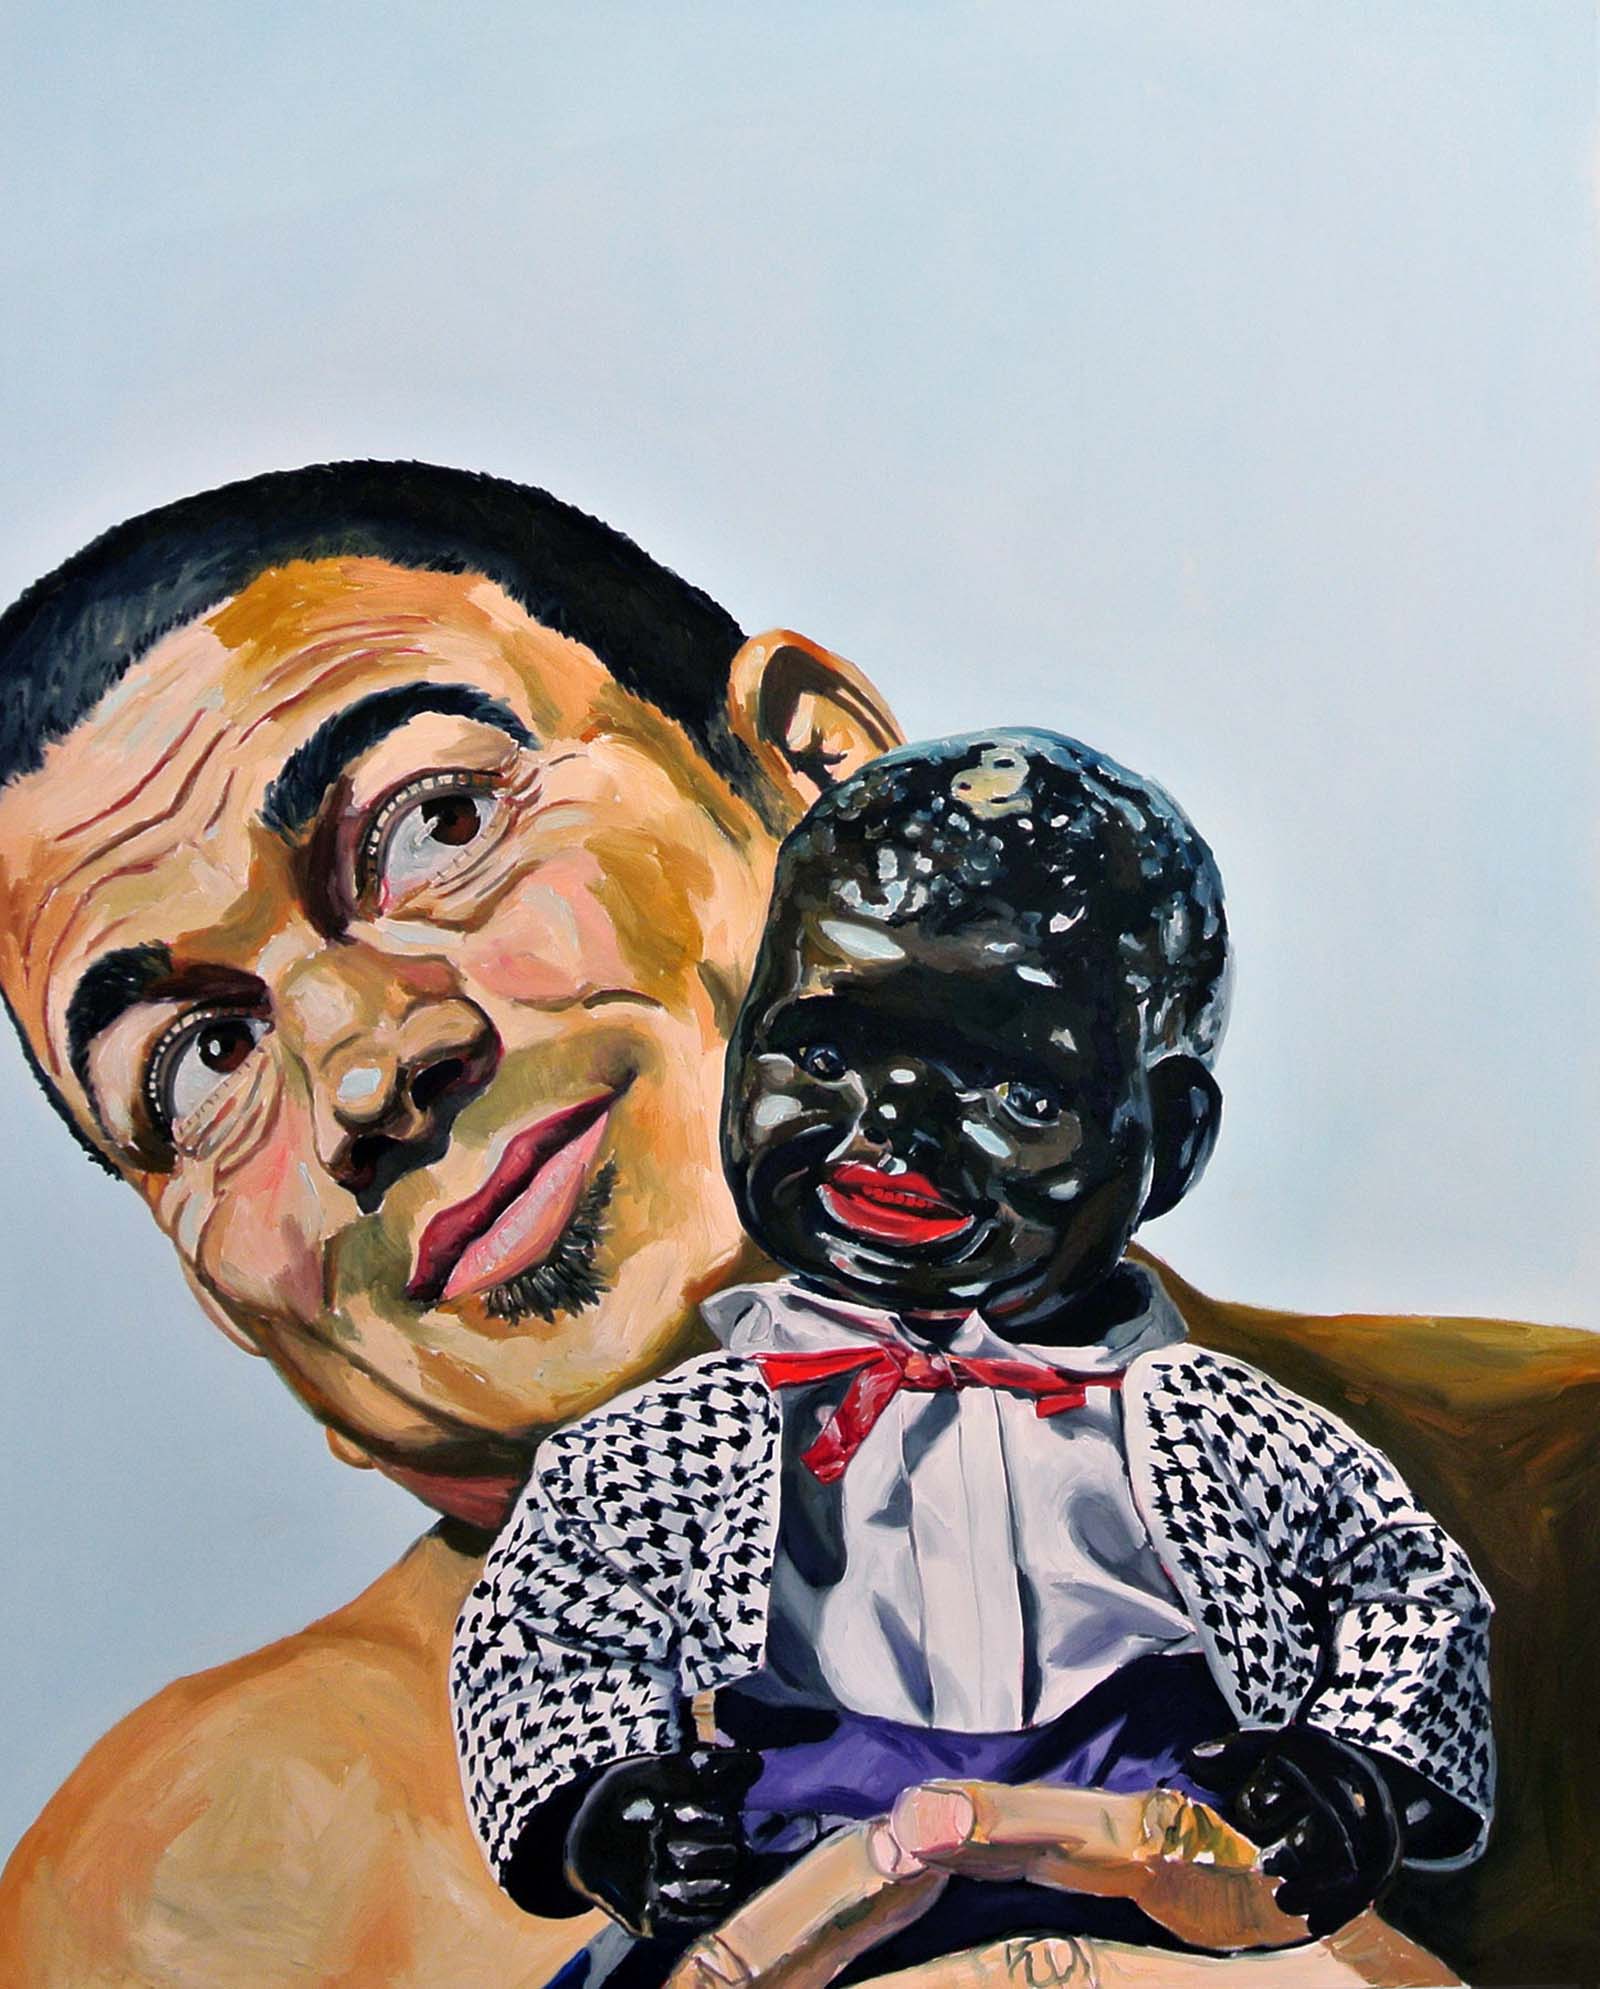 Michael Dixon, "The New Jim Crow, Oil on canvas, 60"x48"' 2015